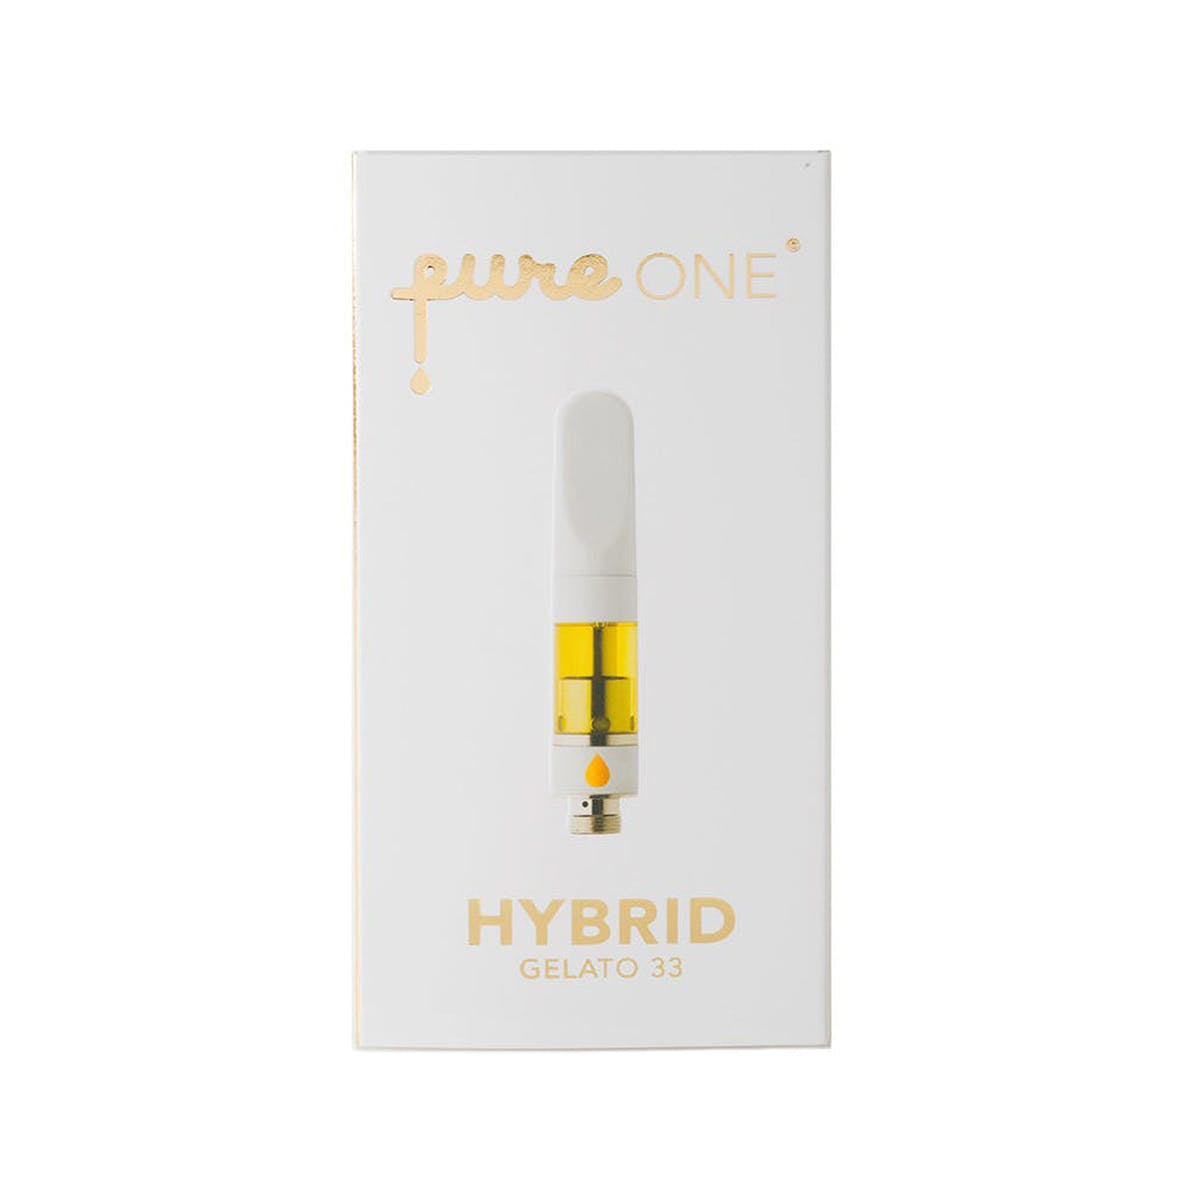 Hybrid PureONE CO2 Cartridge - Gelato 33